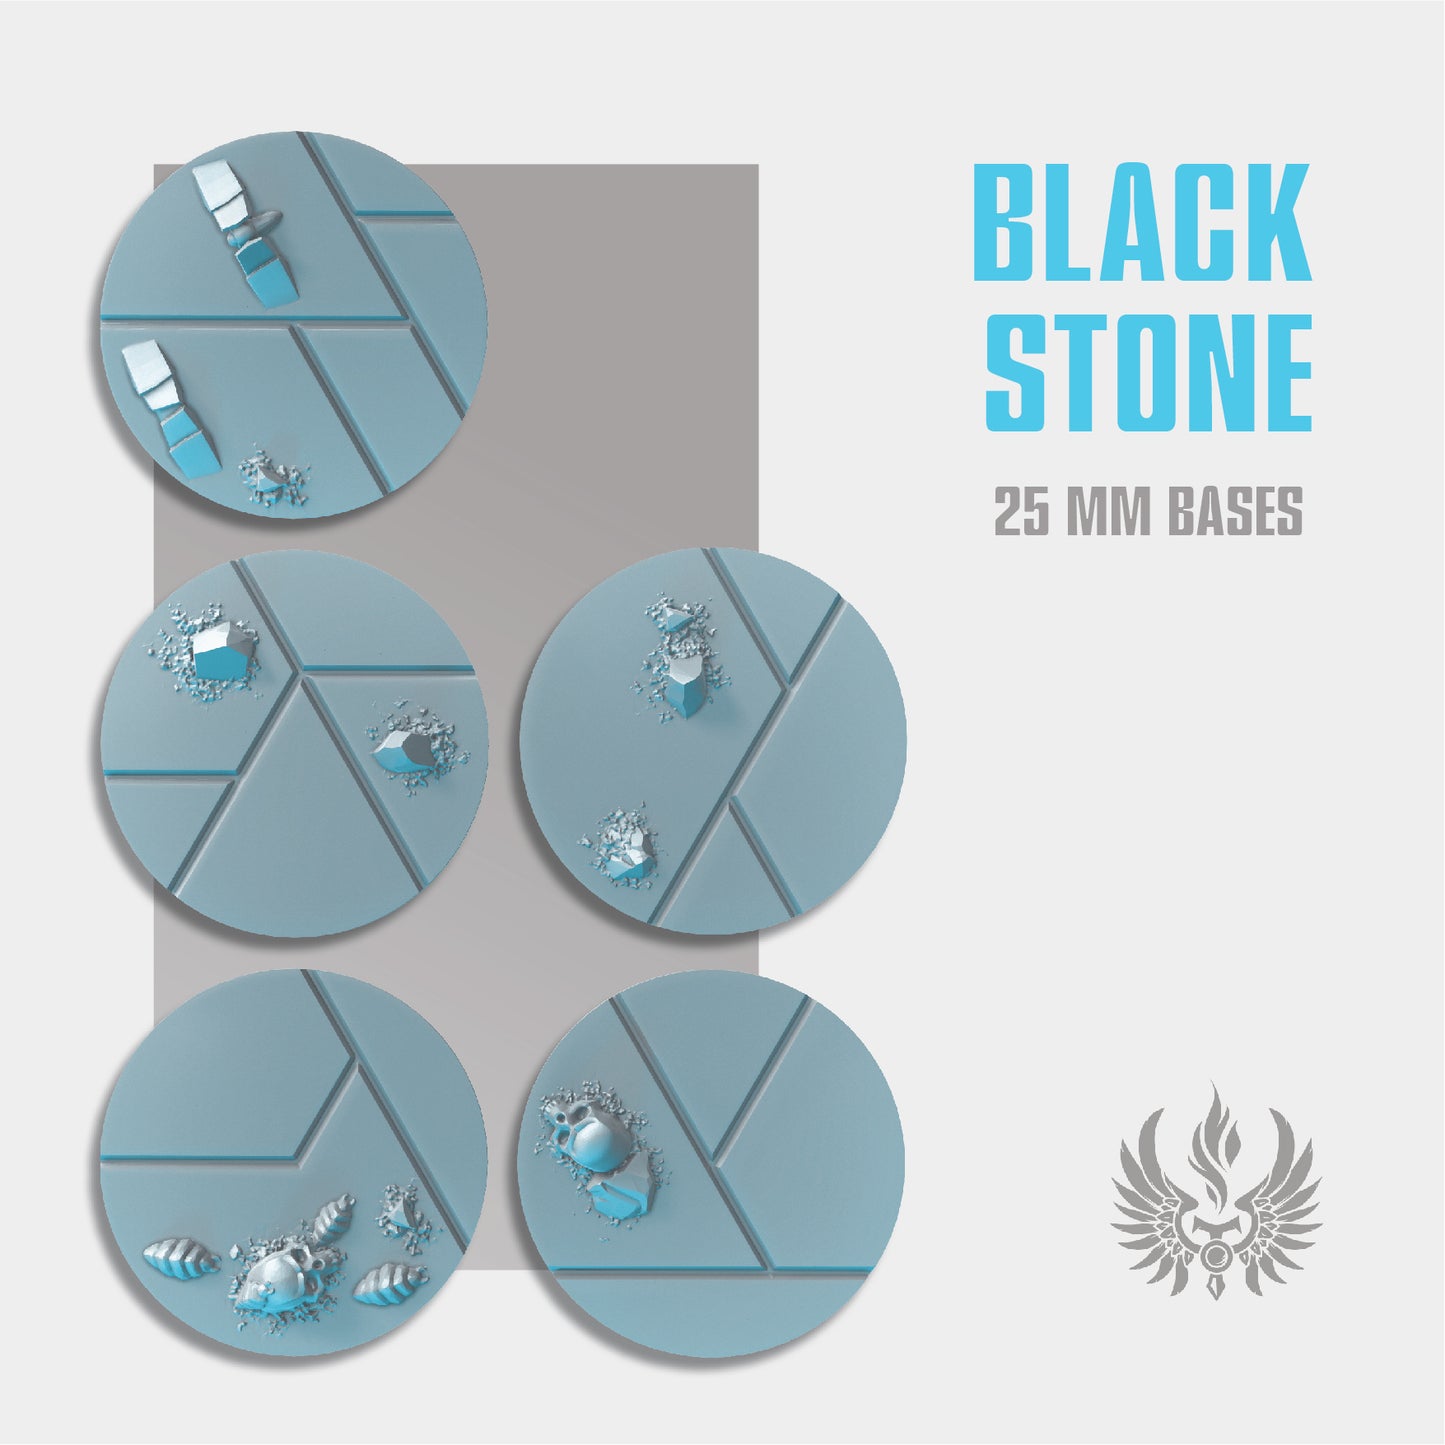 Black stone bases 25 mm set 1, STL